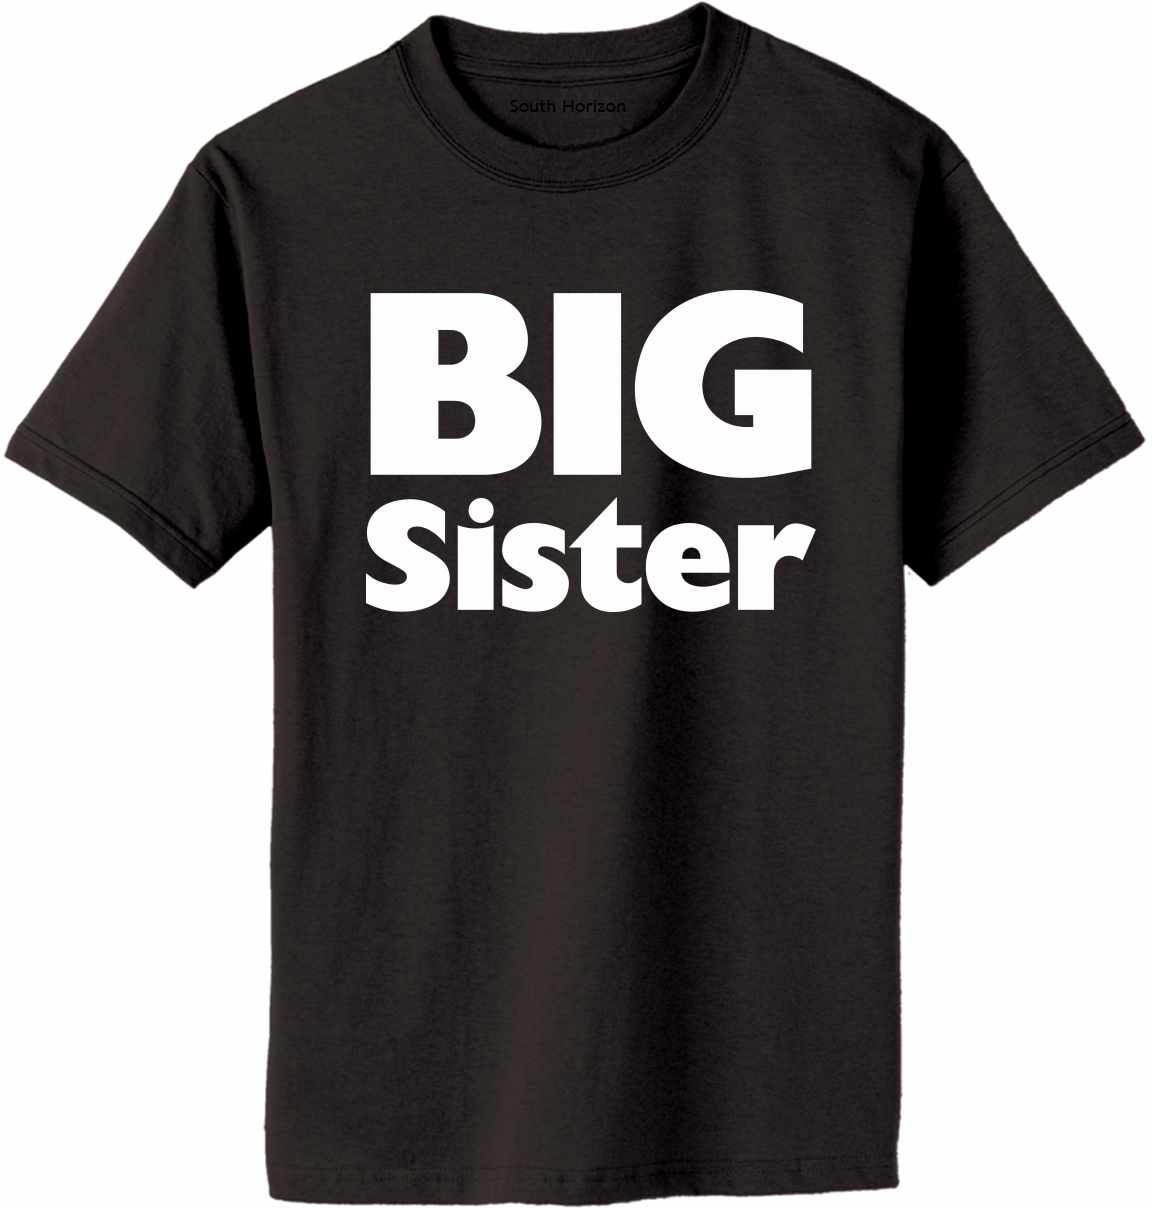 BIG SISTER Adult T-Shirt